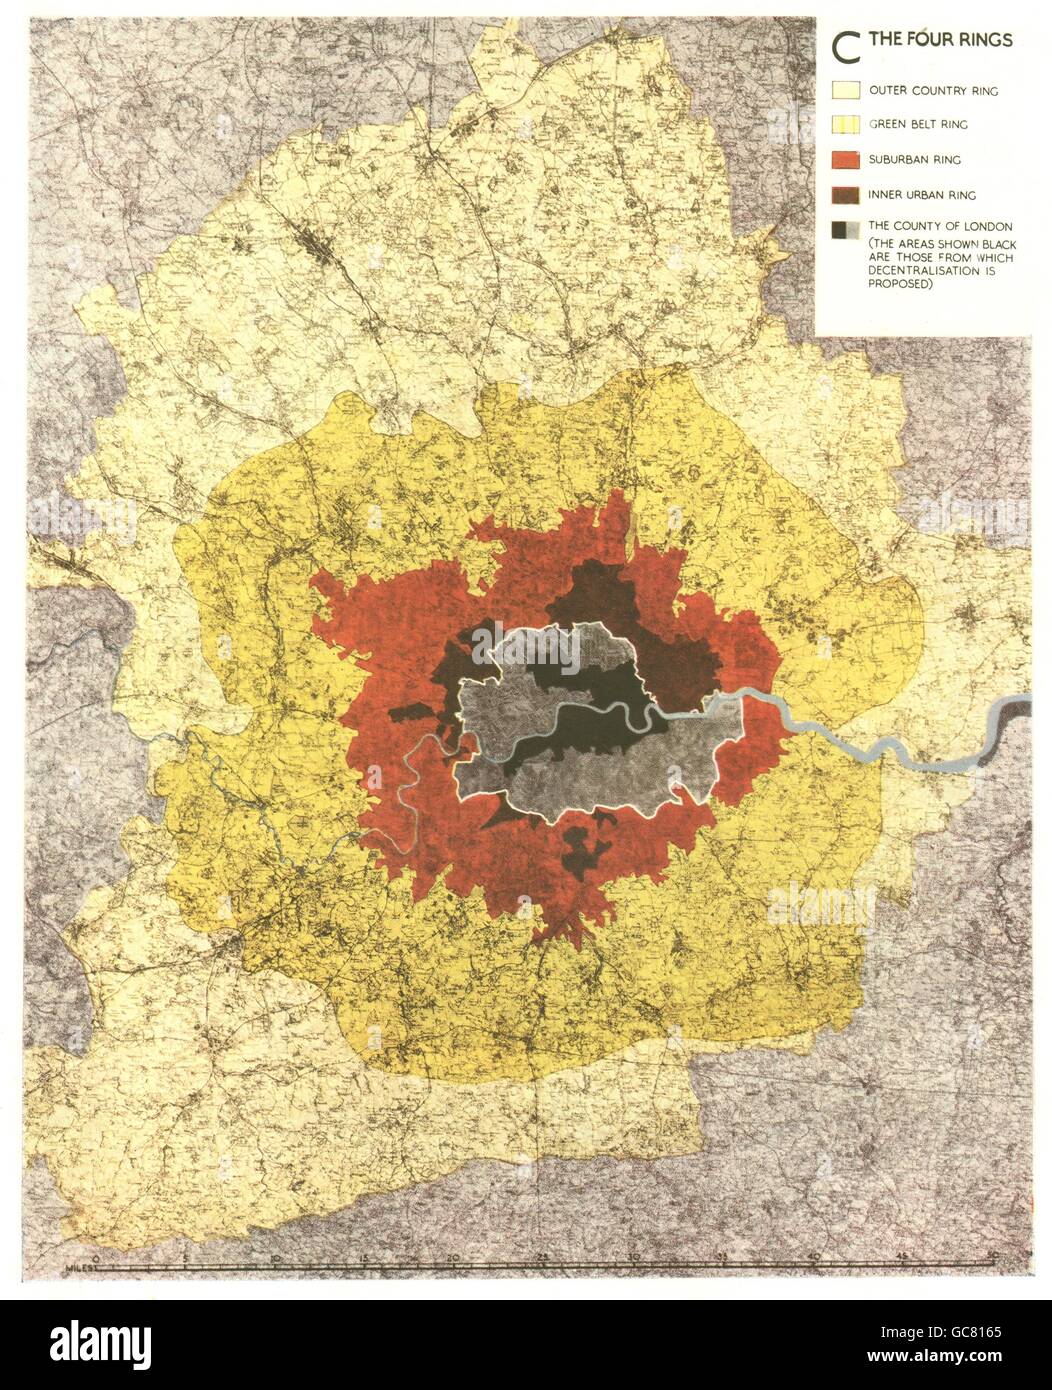 GREATER LONDON PLAN. Quattro anelli. Cintura verde sub/urban. ABERCROMBIE,  1944 Mappa Foto stock - Alamy